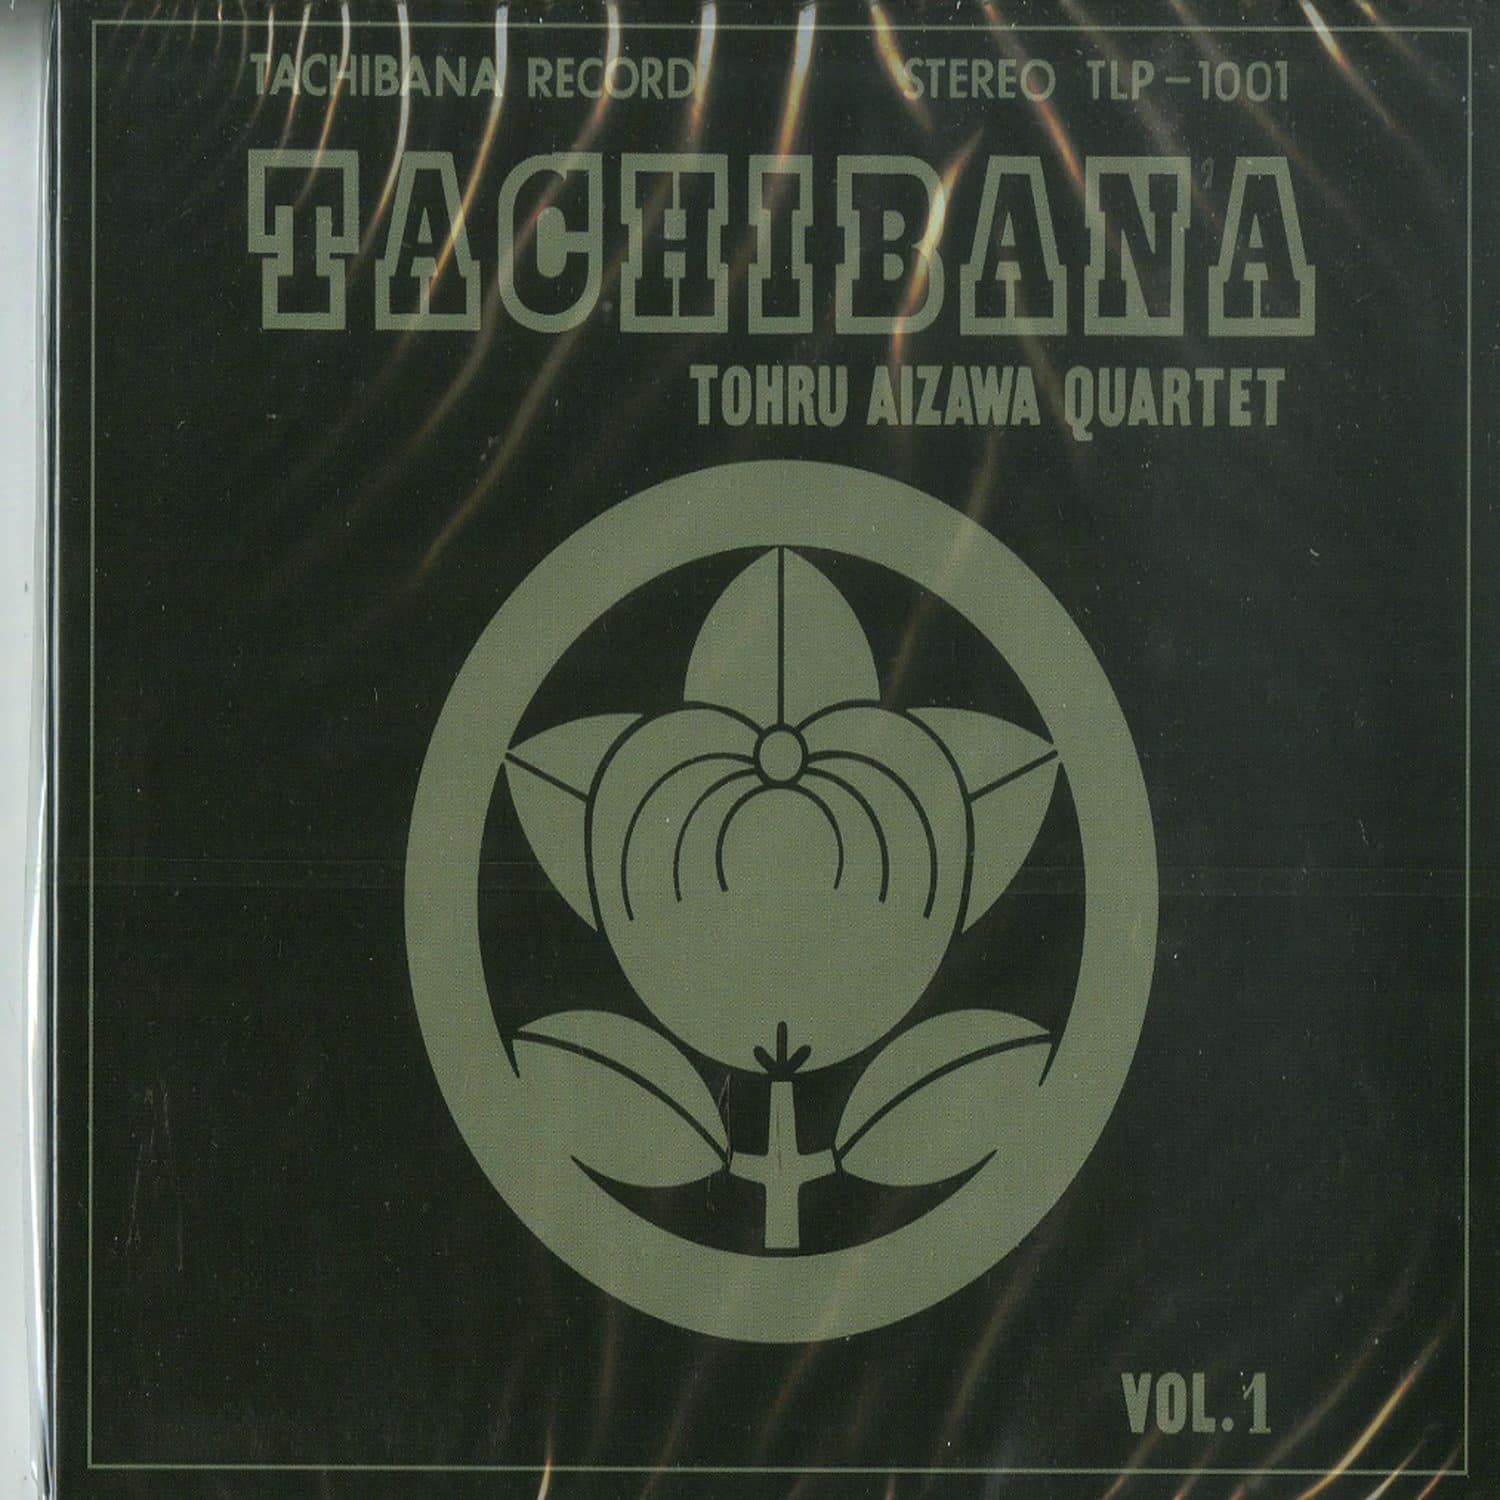 Tohru Aizawa Quartet - TACHIBANA VOL. 1 